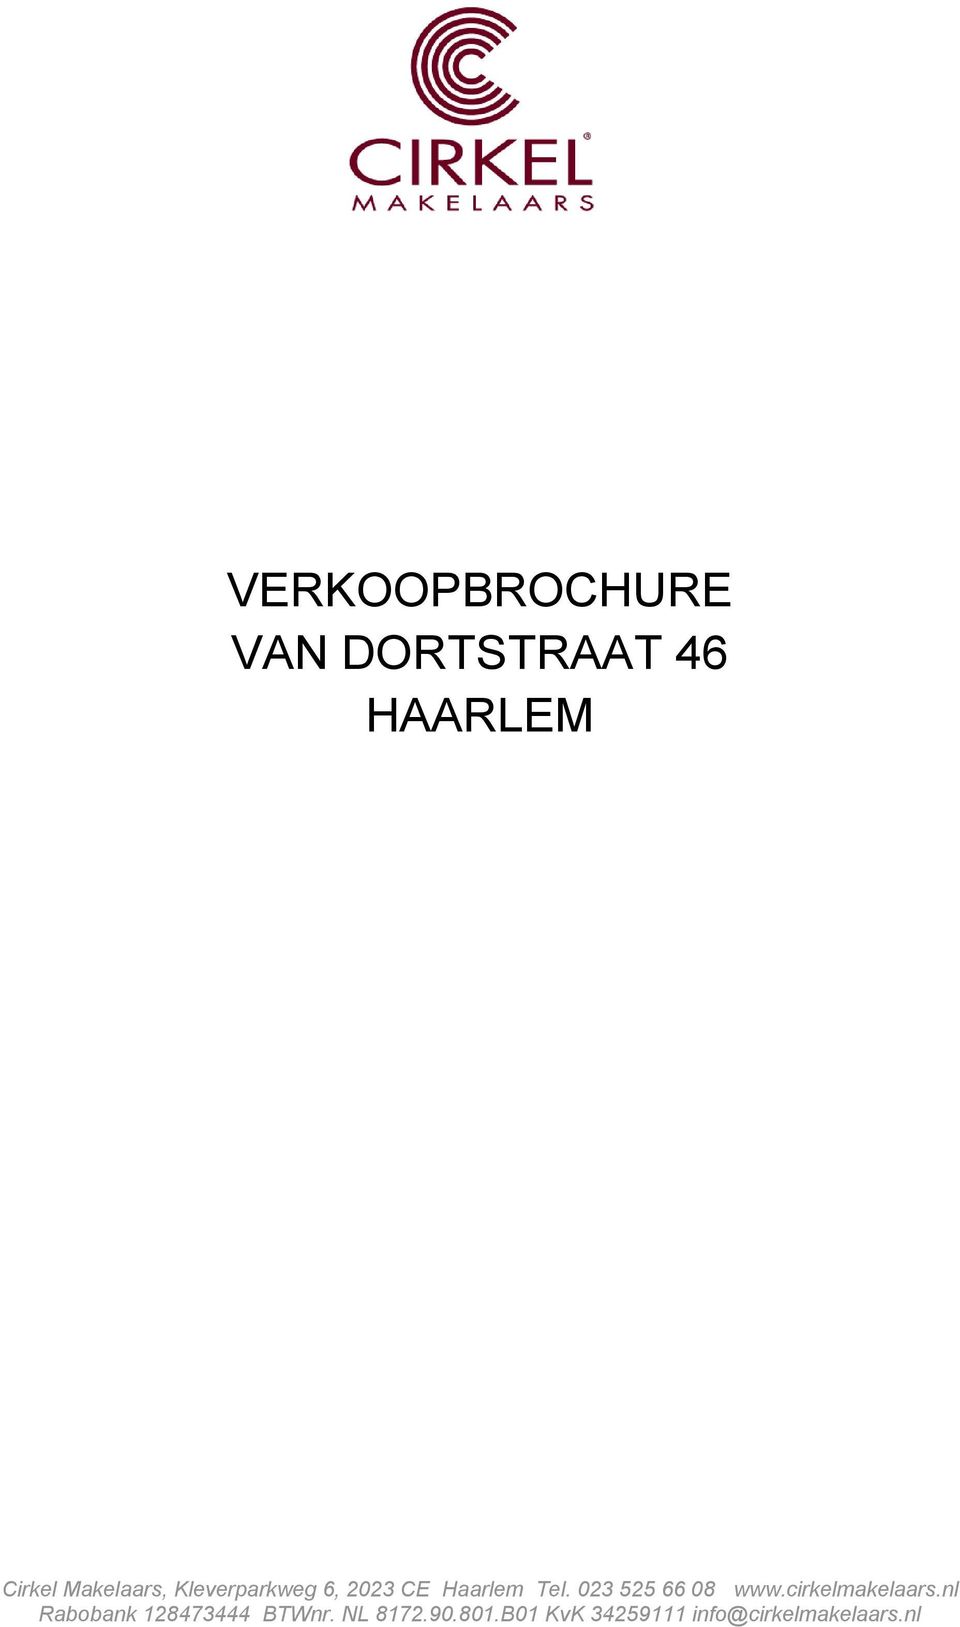 Kleverparkweg 6, 2023 CE Haarlem